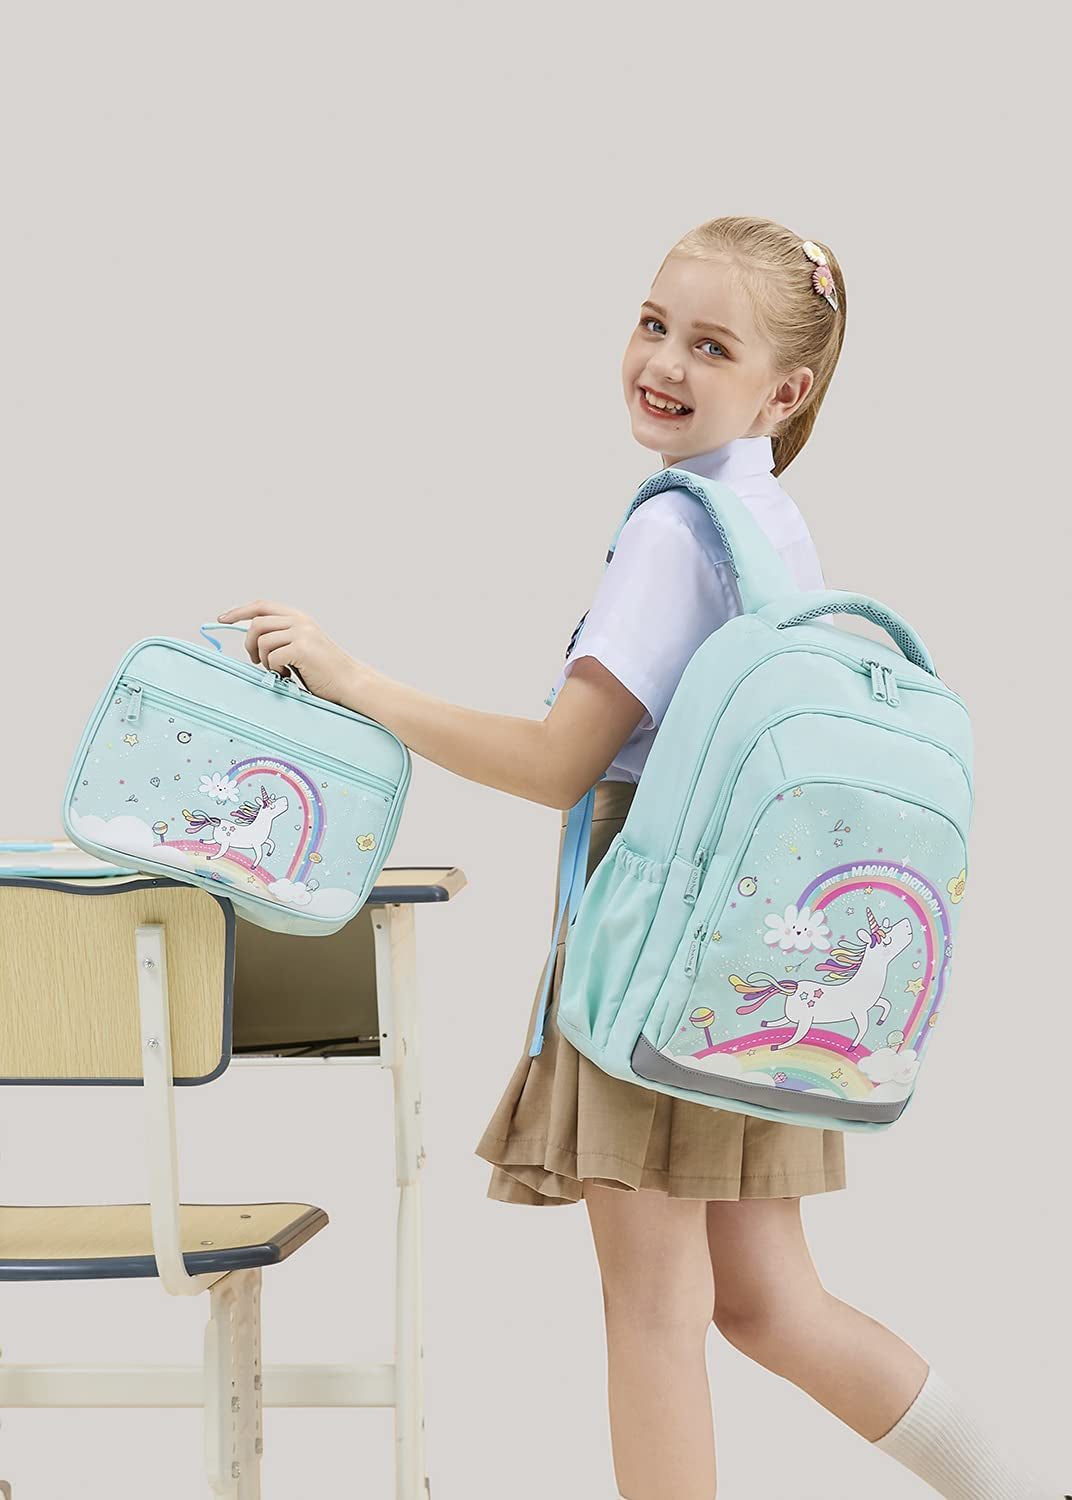 Cute Kids Backpack for Girls Kindergarten Elementary Unicorn School Backpacks Set with Lunch Box (Unicorn Teal)